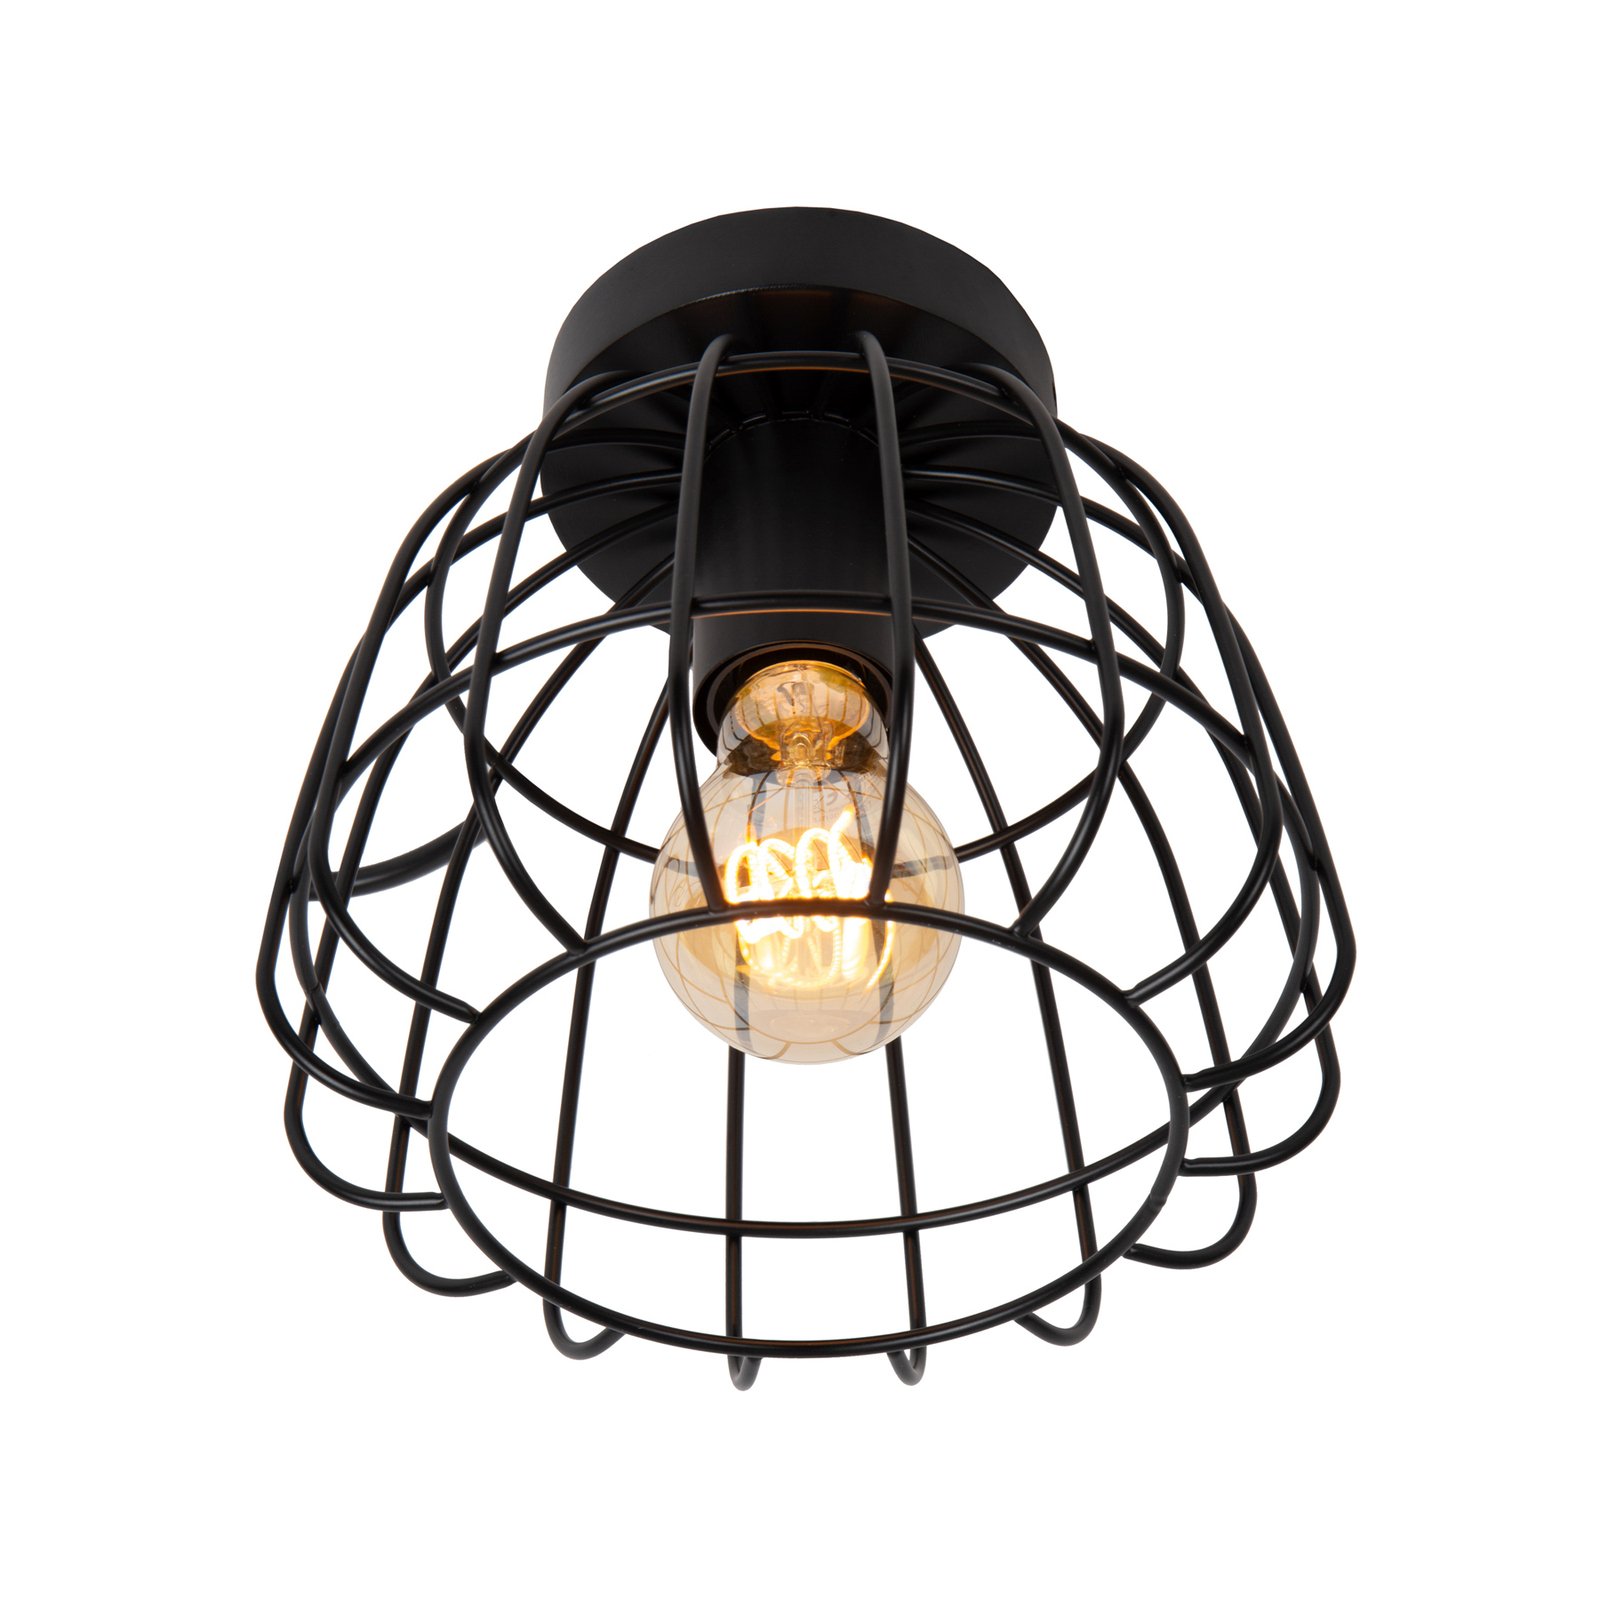 Plafondlamp Filox met kooikap, zwart